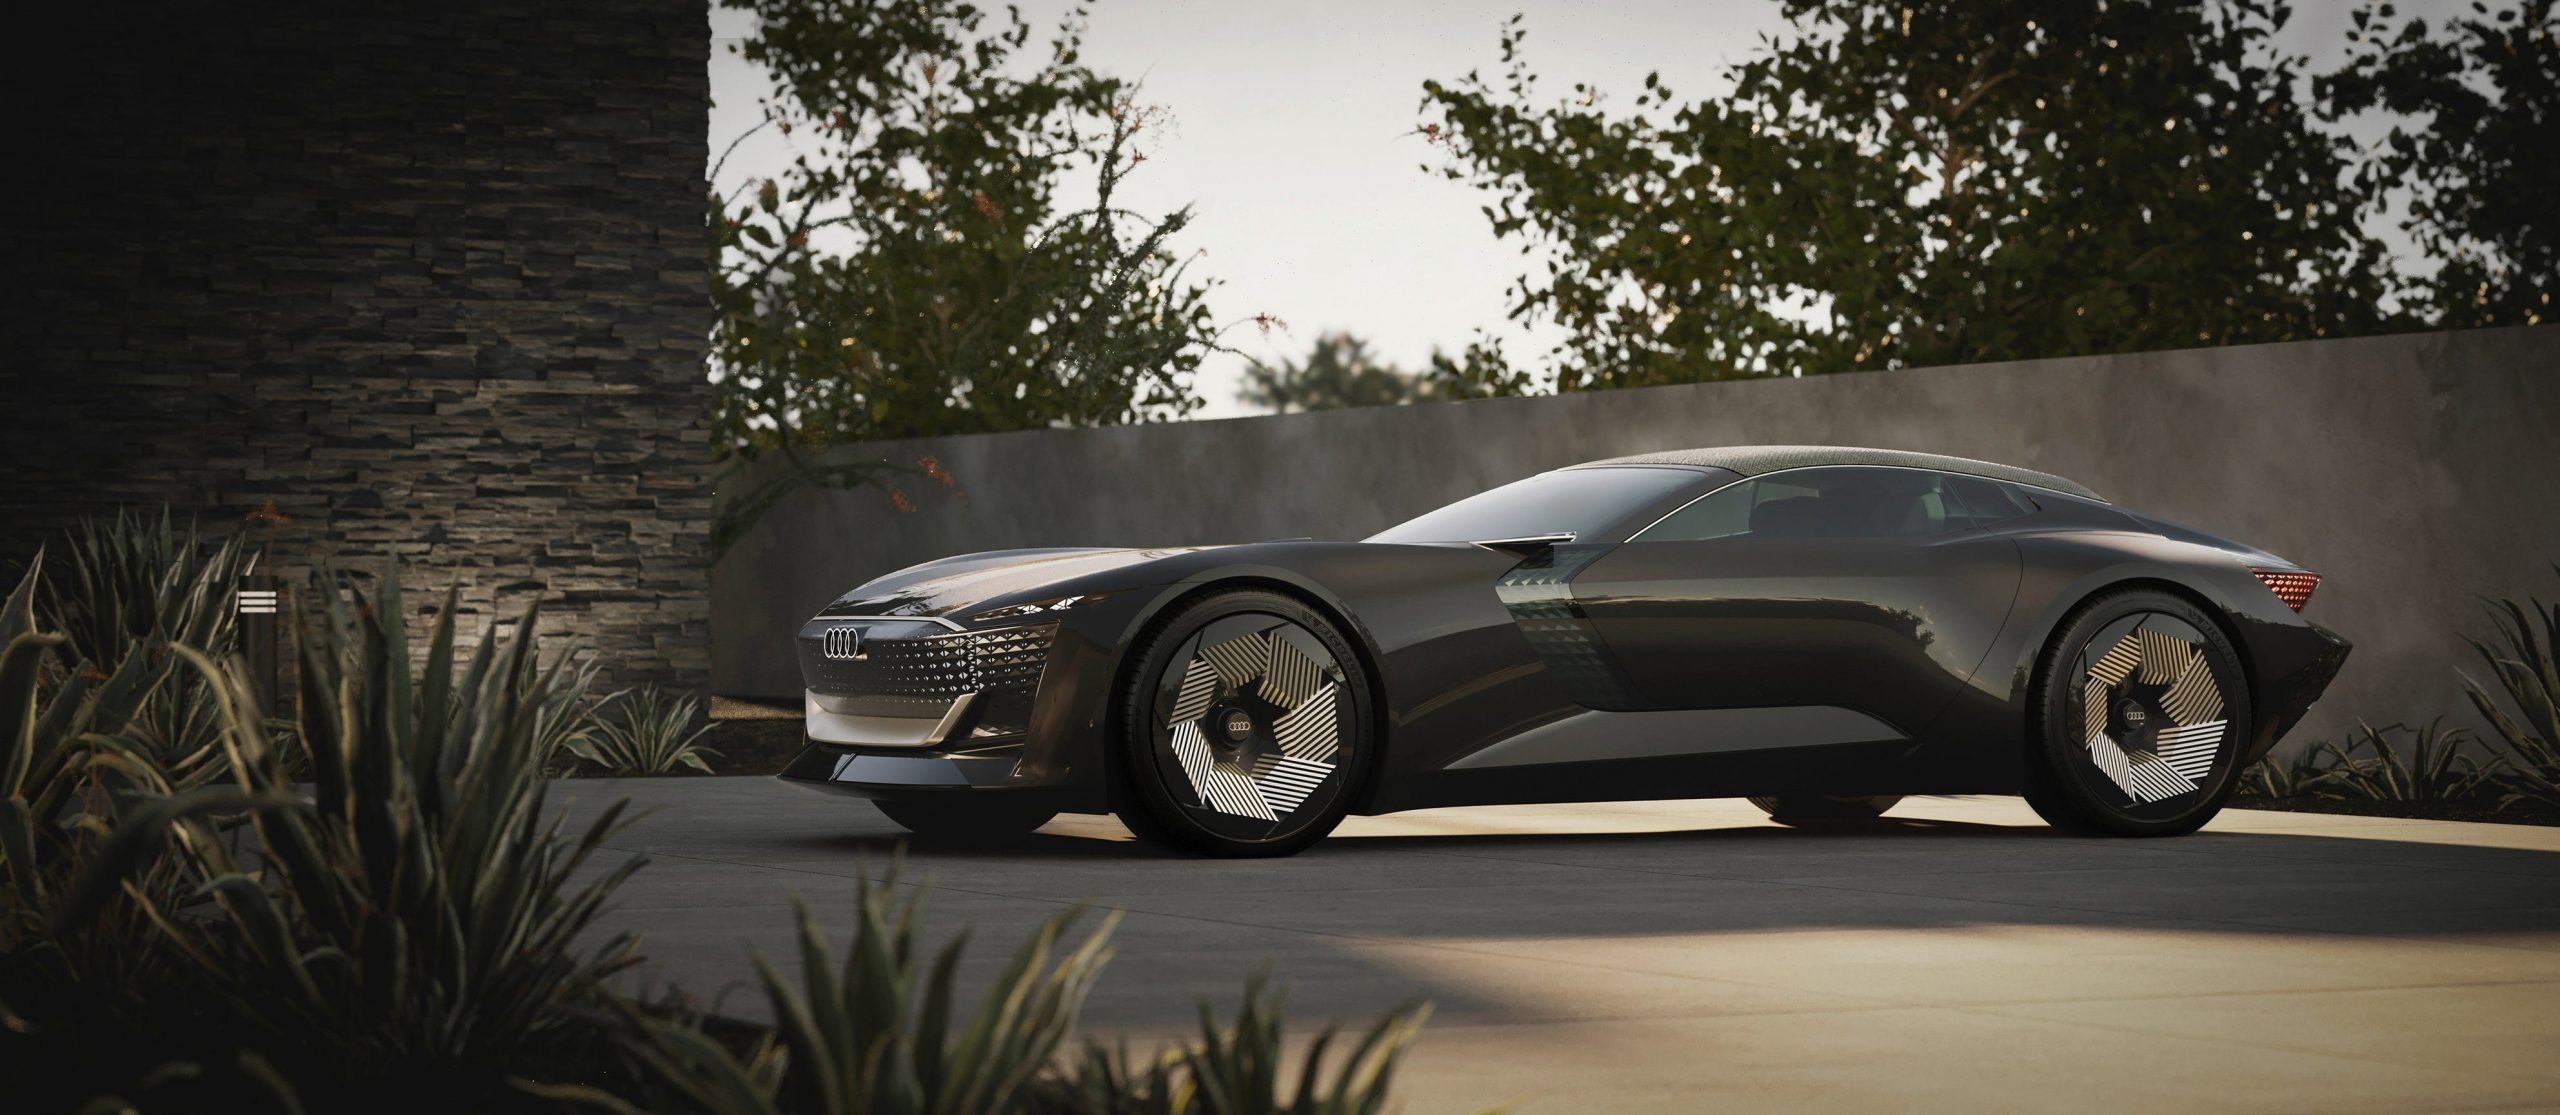 A sleek black Audi vehicle with big silver wheels sits on a driveway.